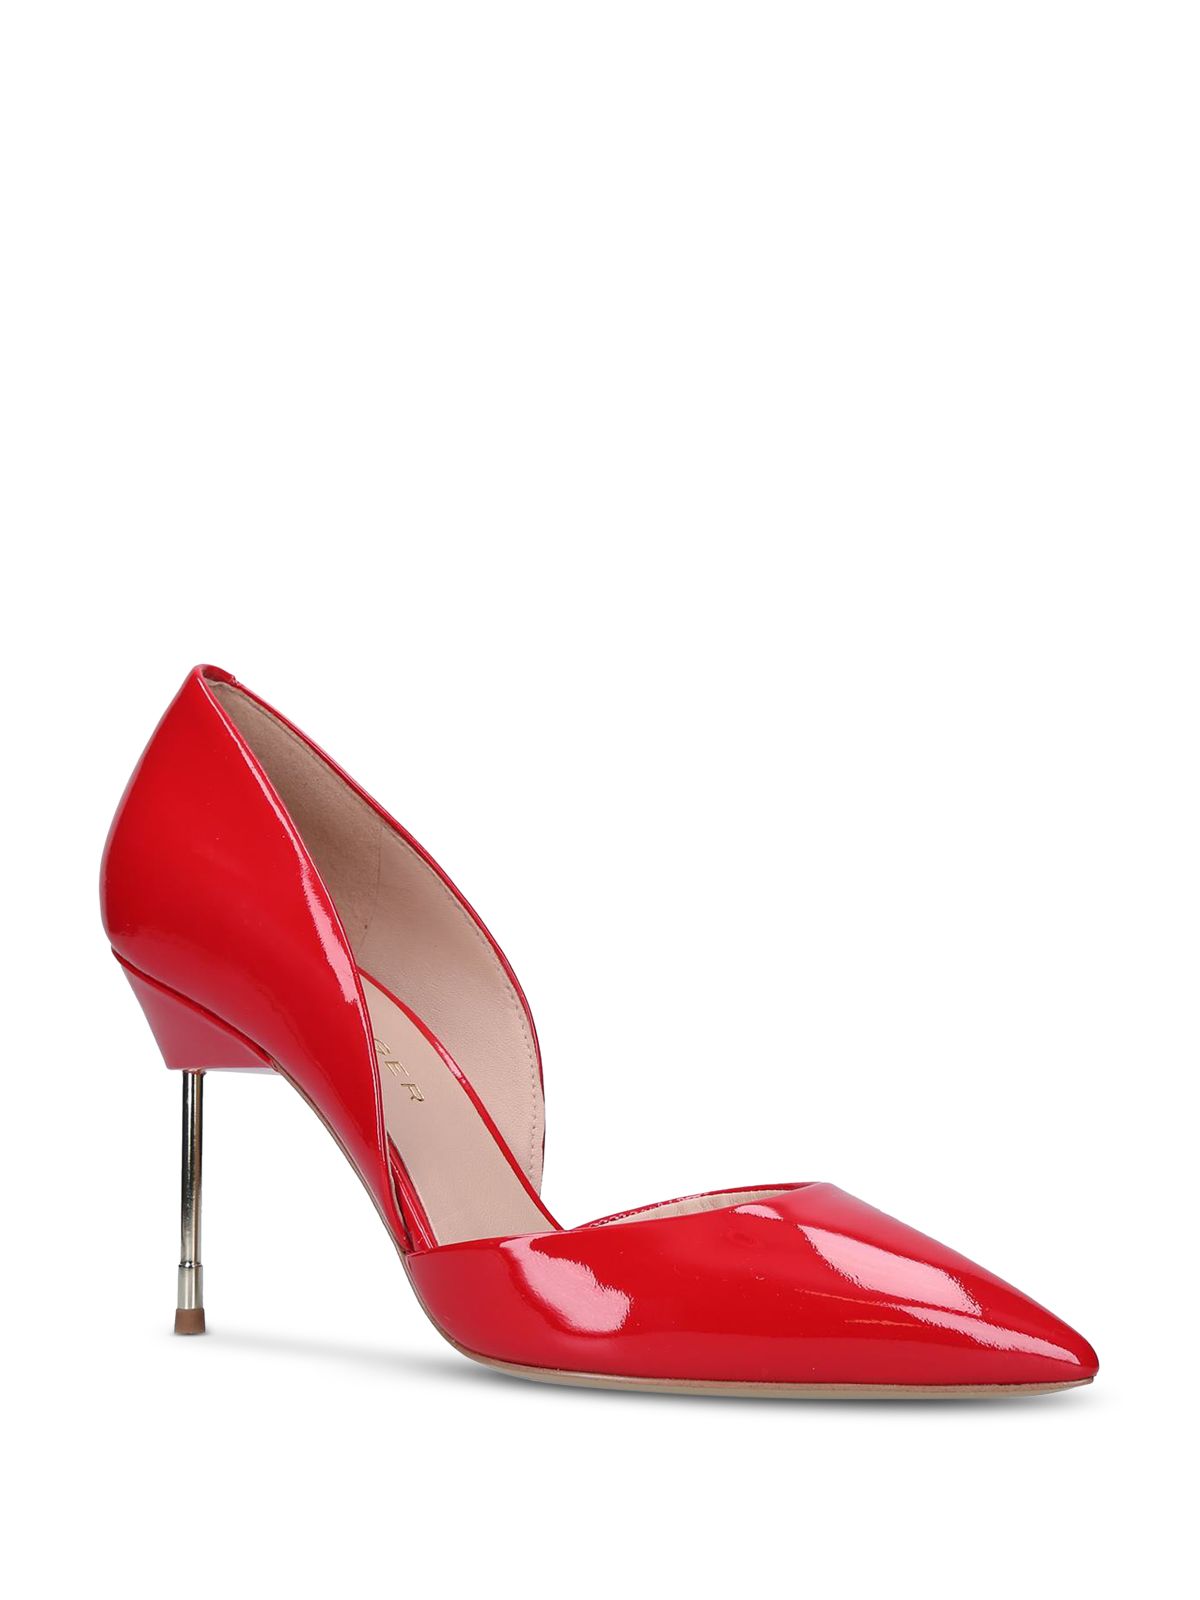 KURT GEIGER LONDON Womens Red Dorsay Bond 90 Pointed Toe Stiletto Slip On Leather Dress Pumps Shoes 36